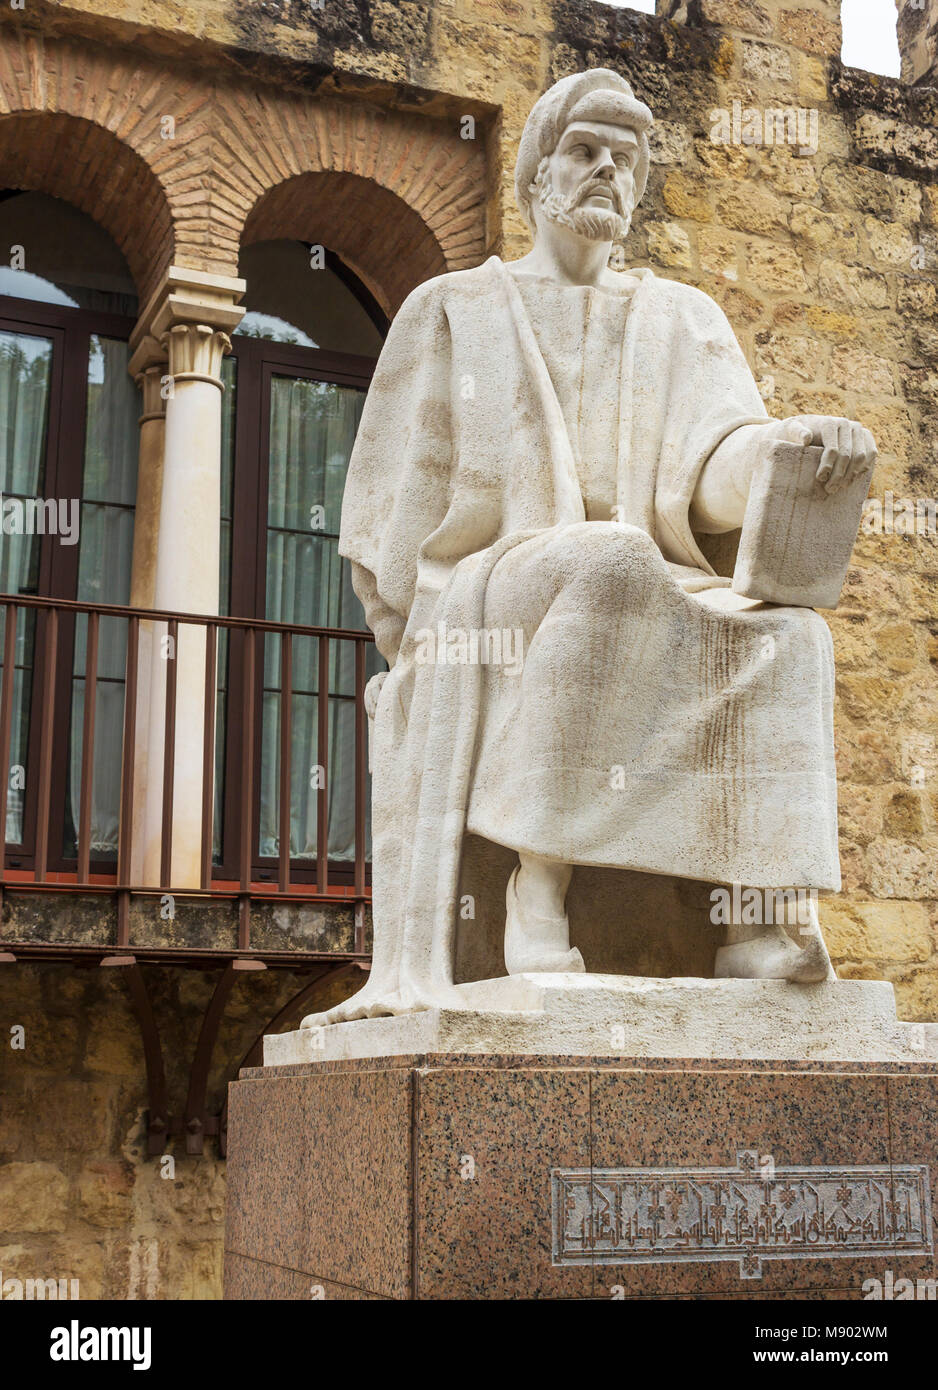 Cordoba, España. Estatua de Ibn Rushd, Abū l-Walīd Muḥammad ibn, ʾAḥmad Ibn Rushd, 1126 - 1198, aka Averroes. Erudito árabe andalusí medieval. Foto de stock